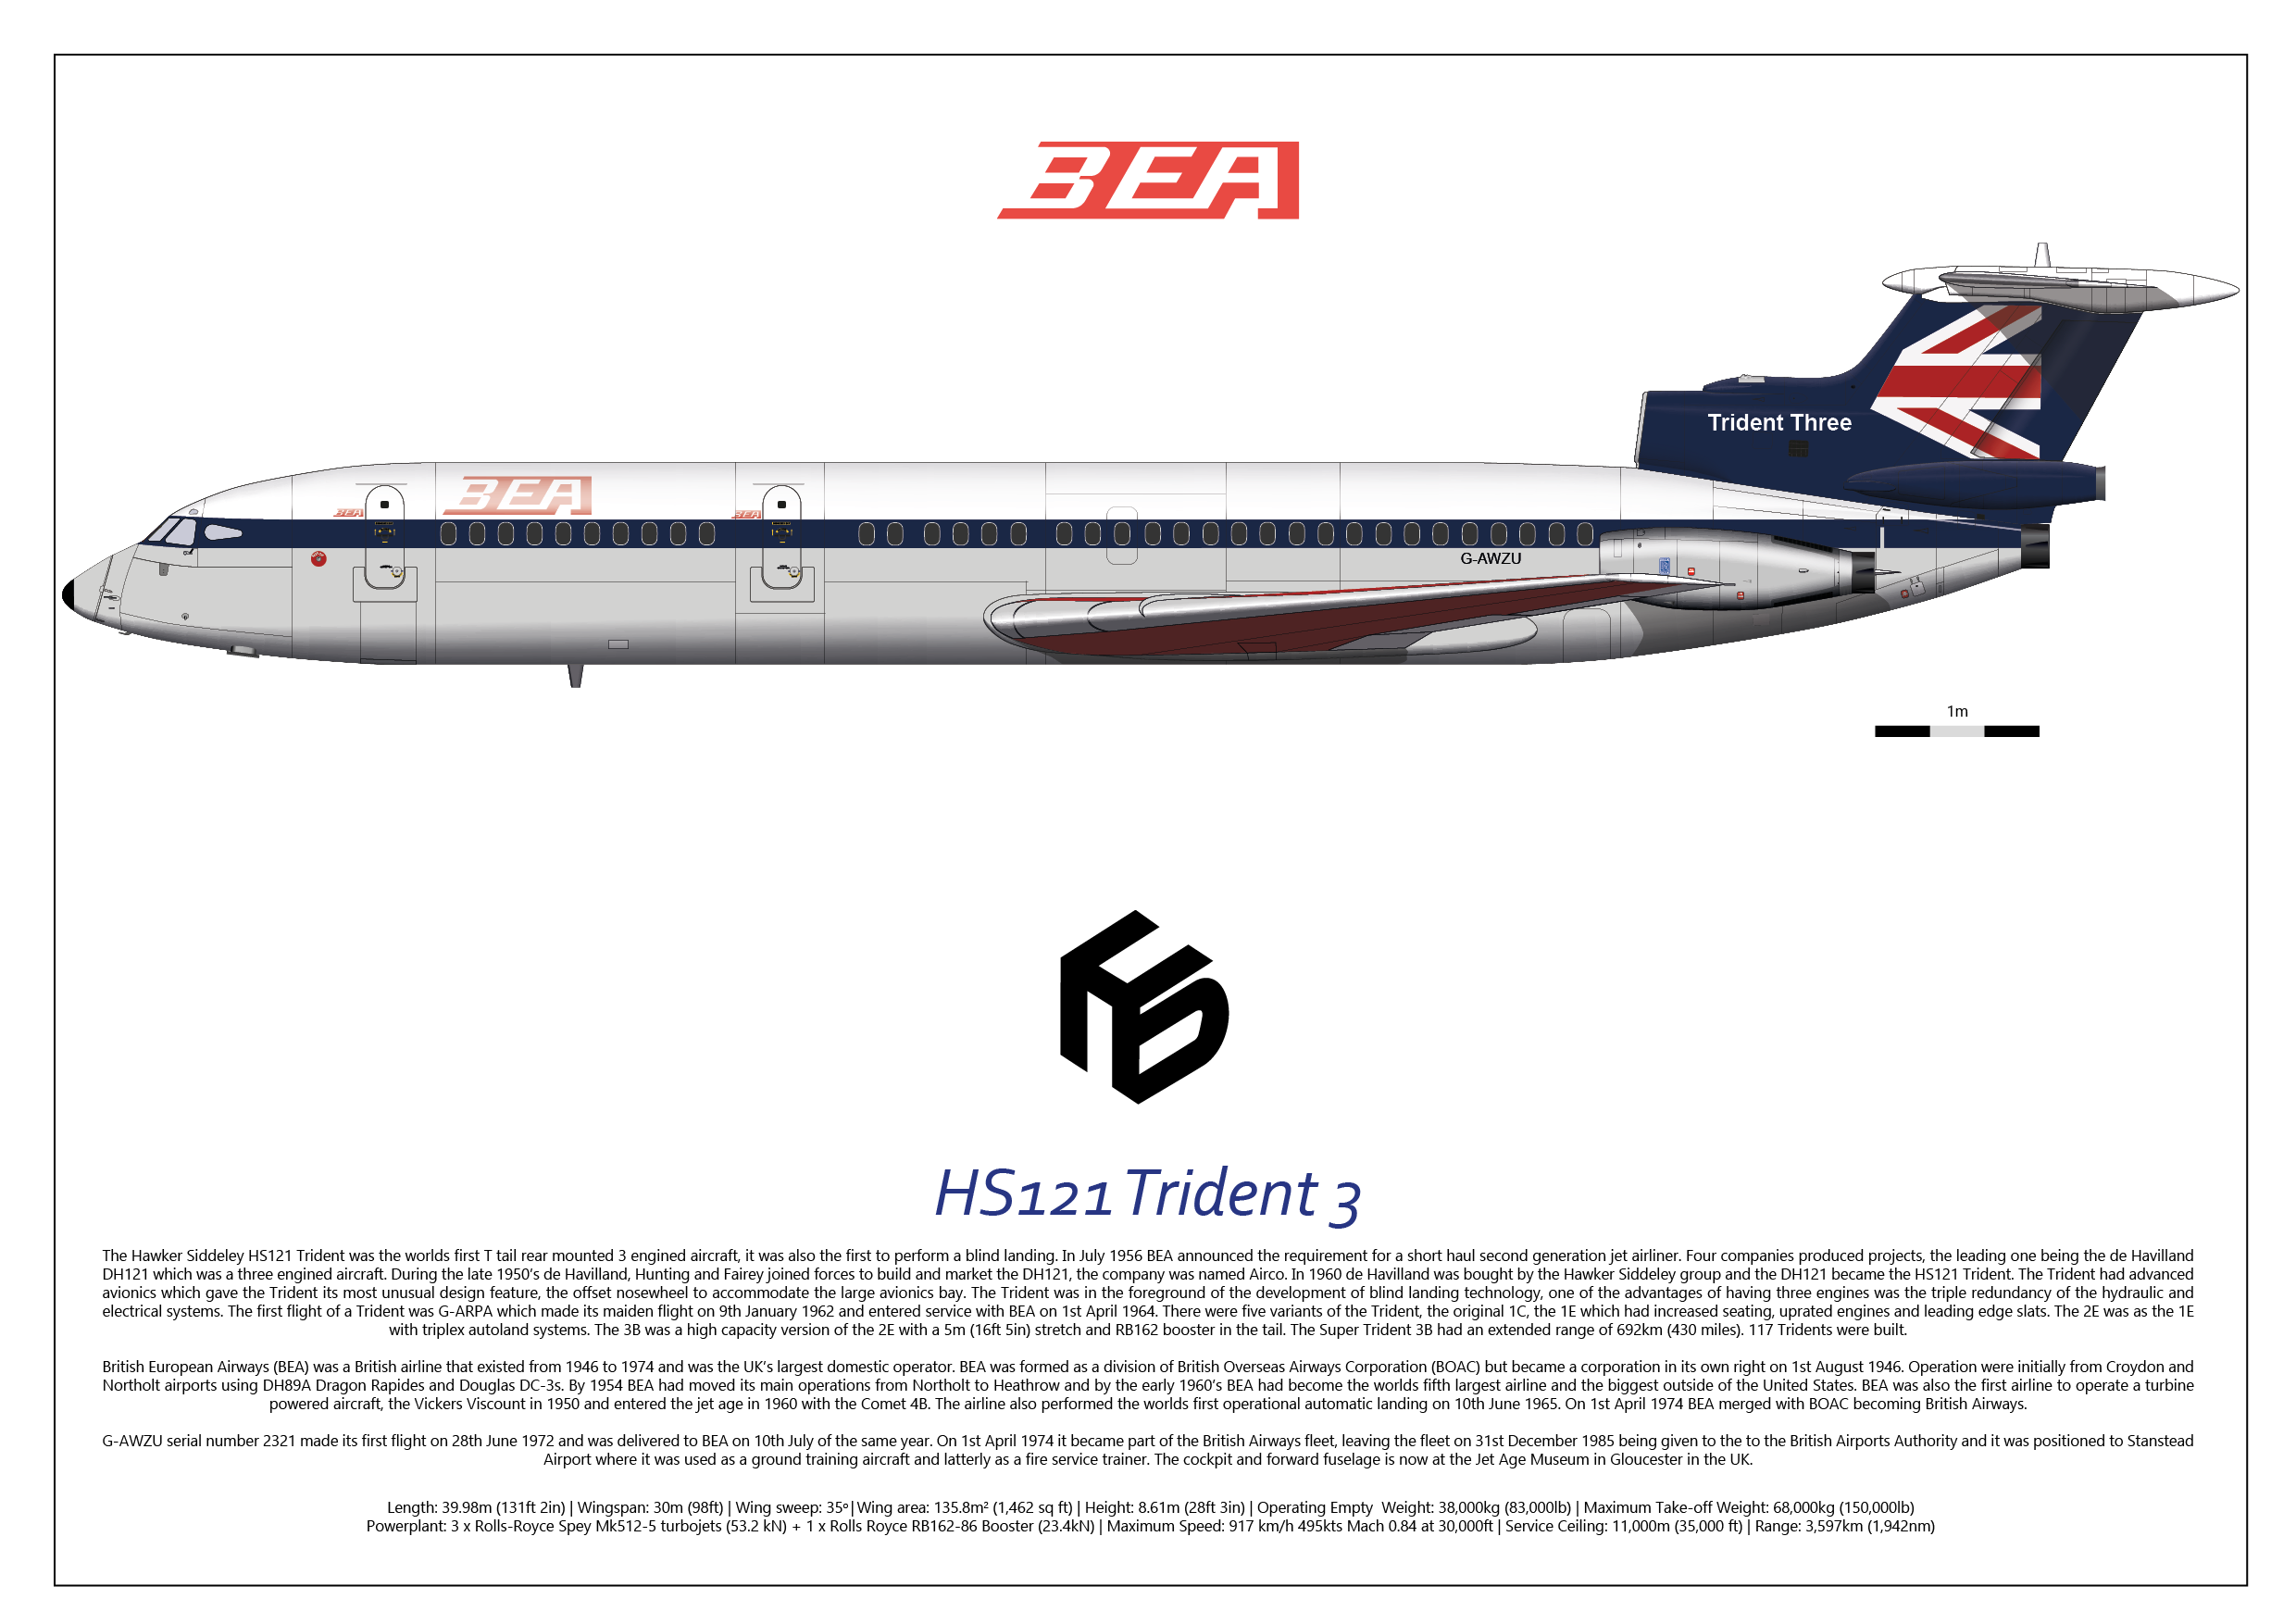 Hawker Siddeley Trident 3 G-AWZU of BEA